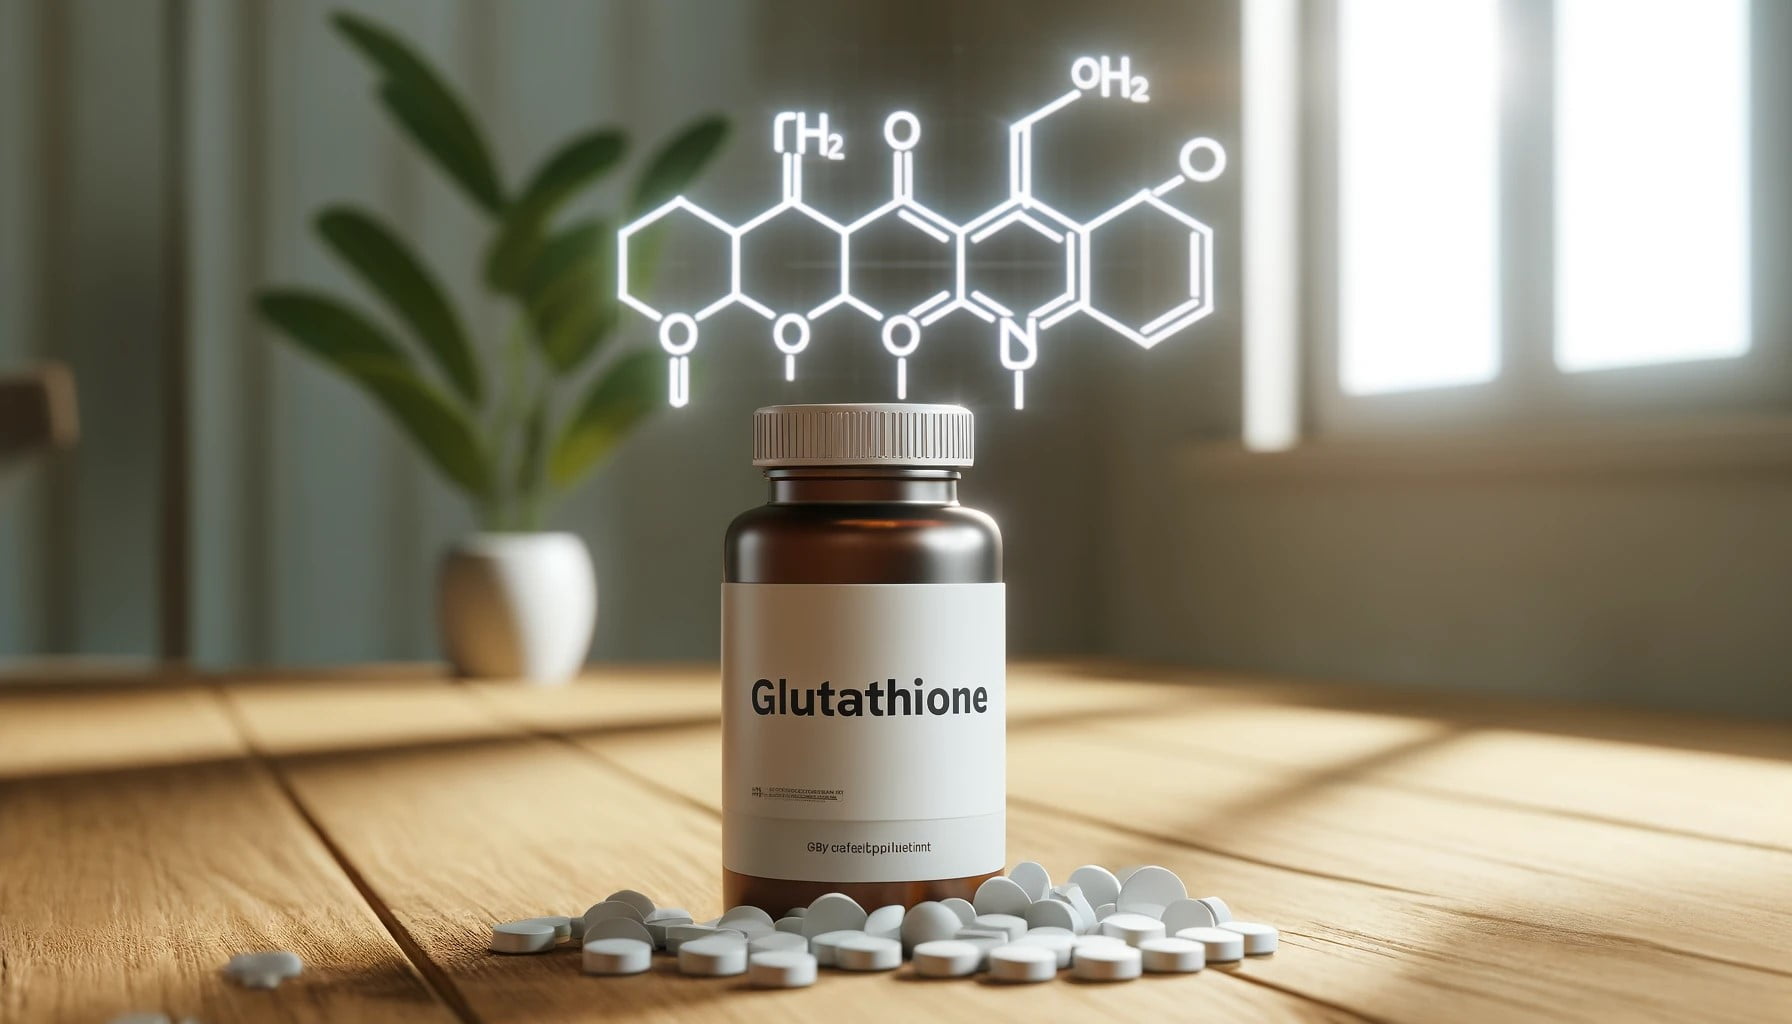 Glutathione supplement bottle for cognition improvement